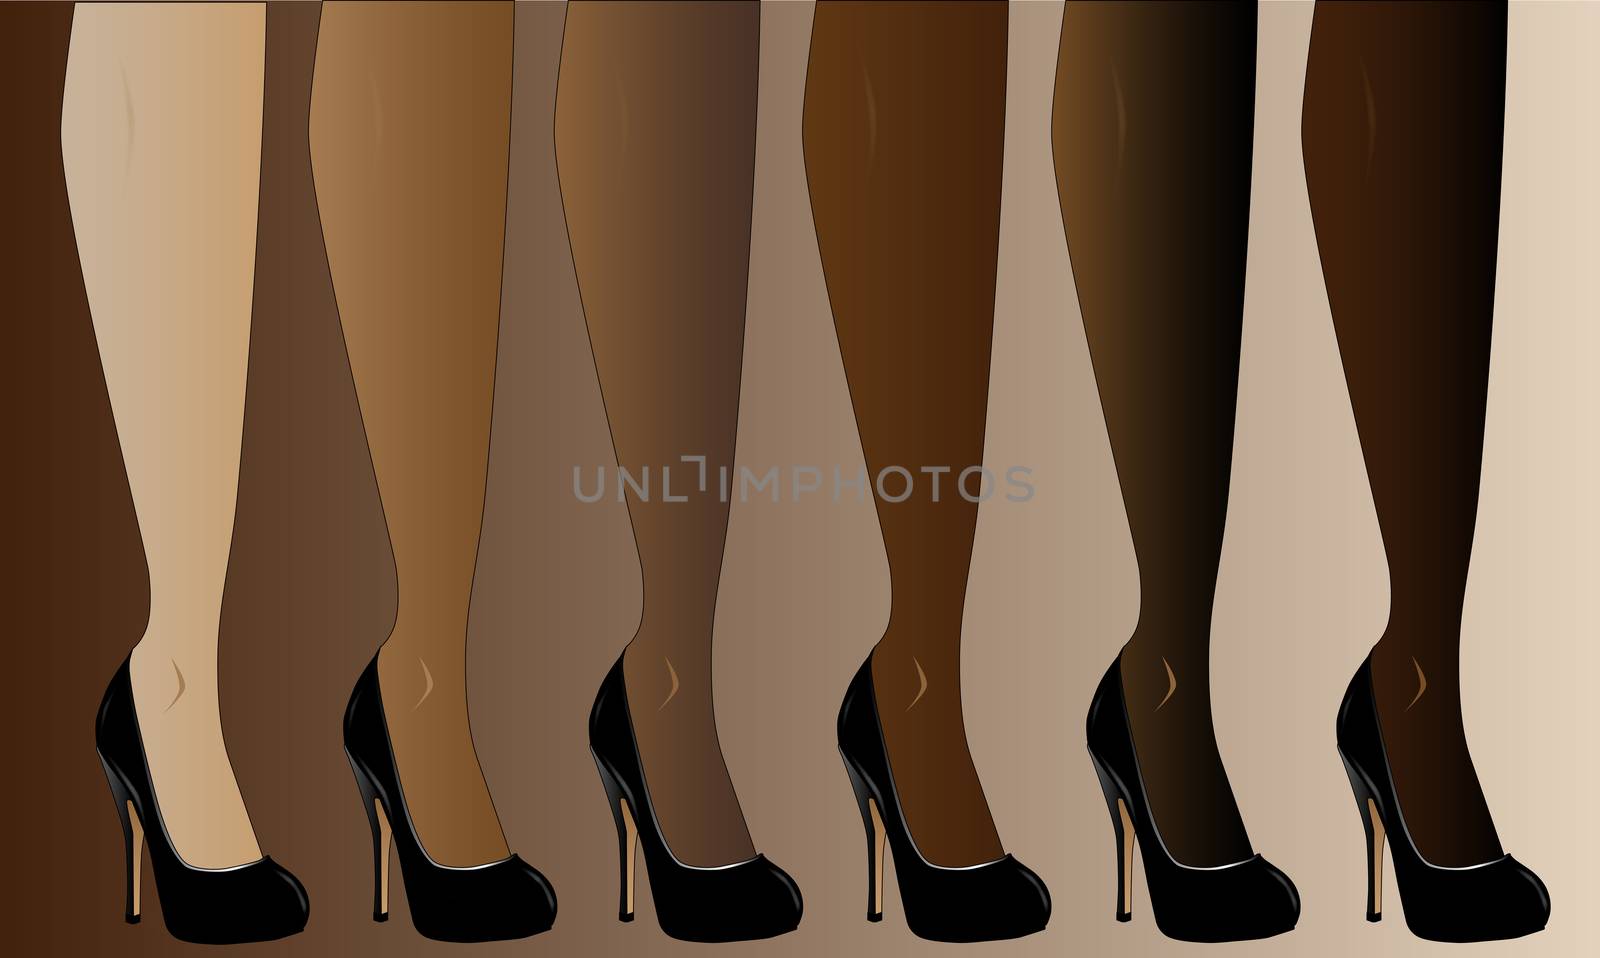 Legs in various skin tones, all wearing stiletto heals.